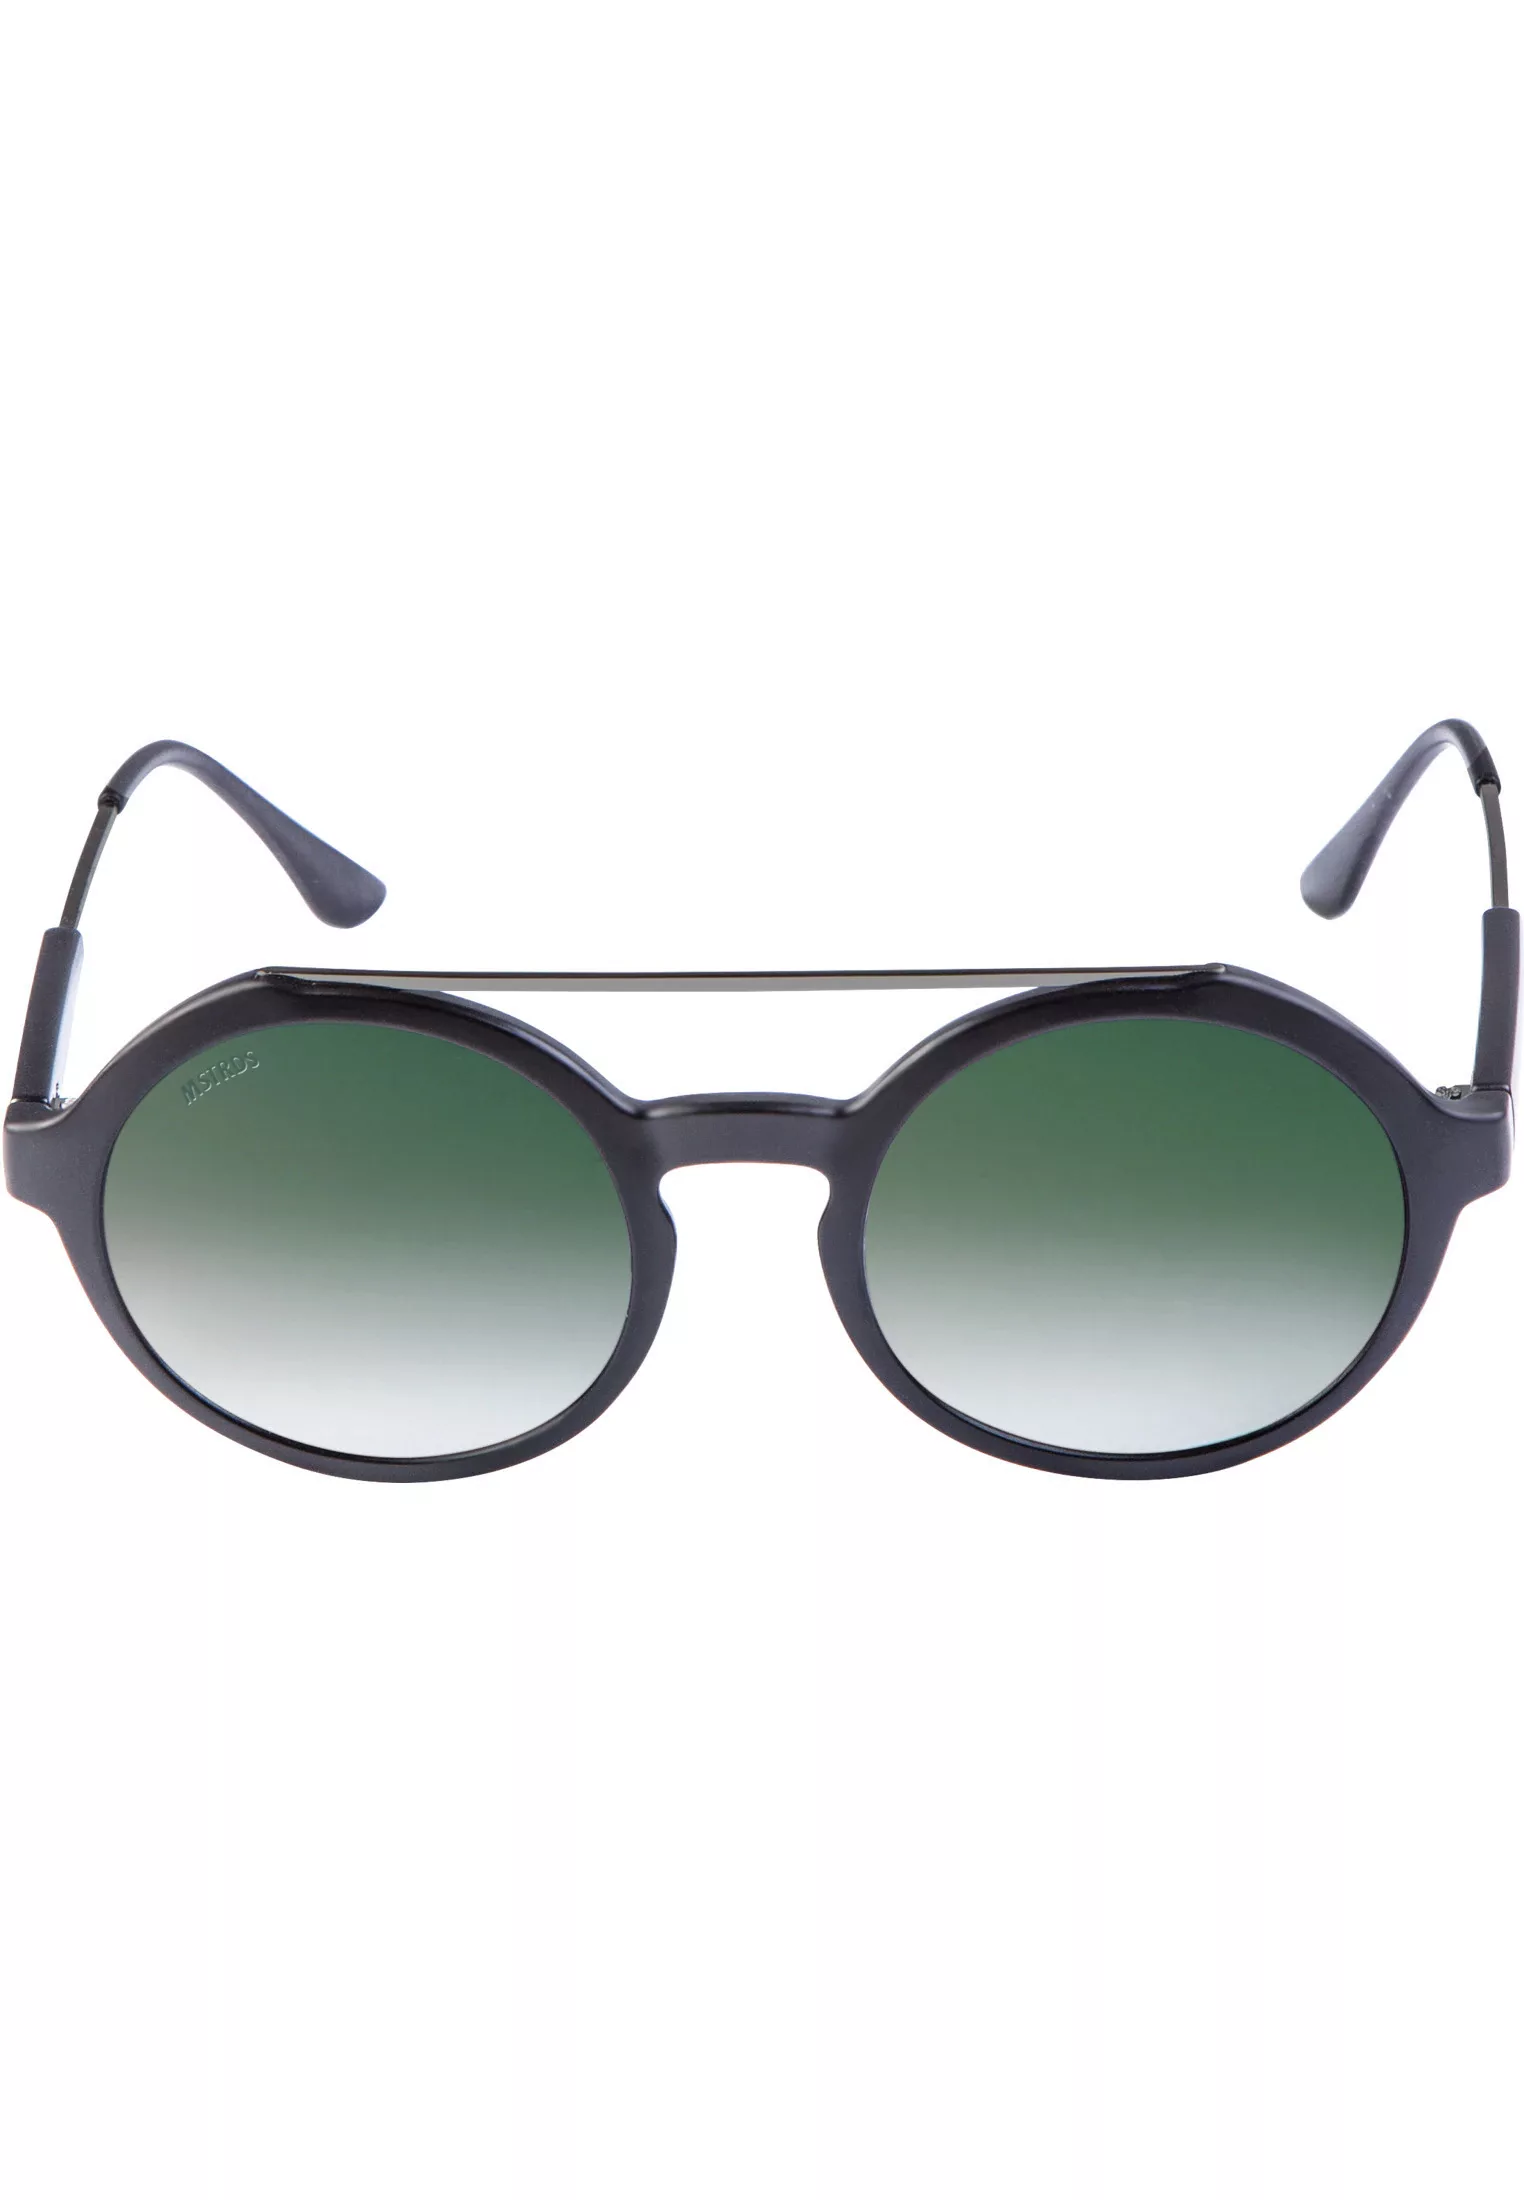 MSTRDS Sonnenbrille "Accessoires Sunglasses Retro Space" günstig online kaufen